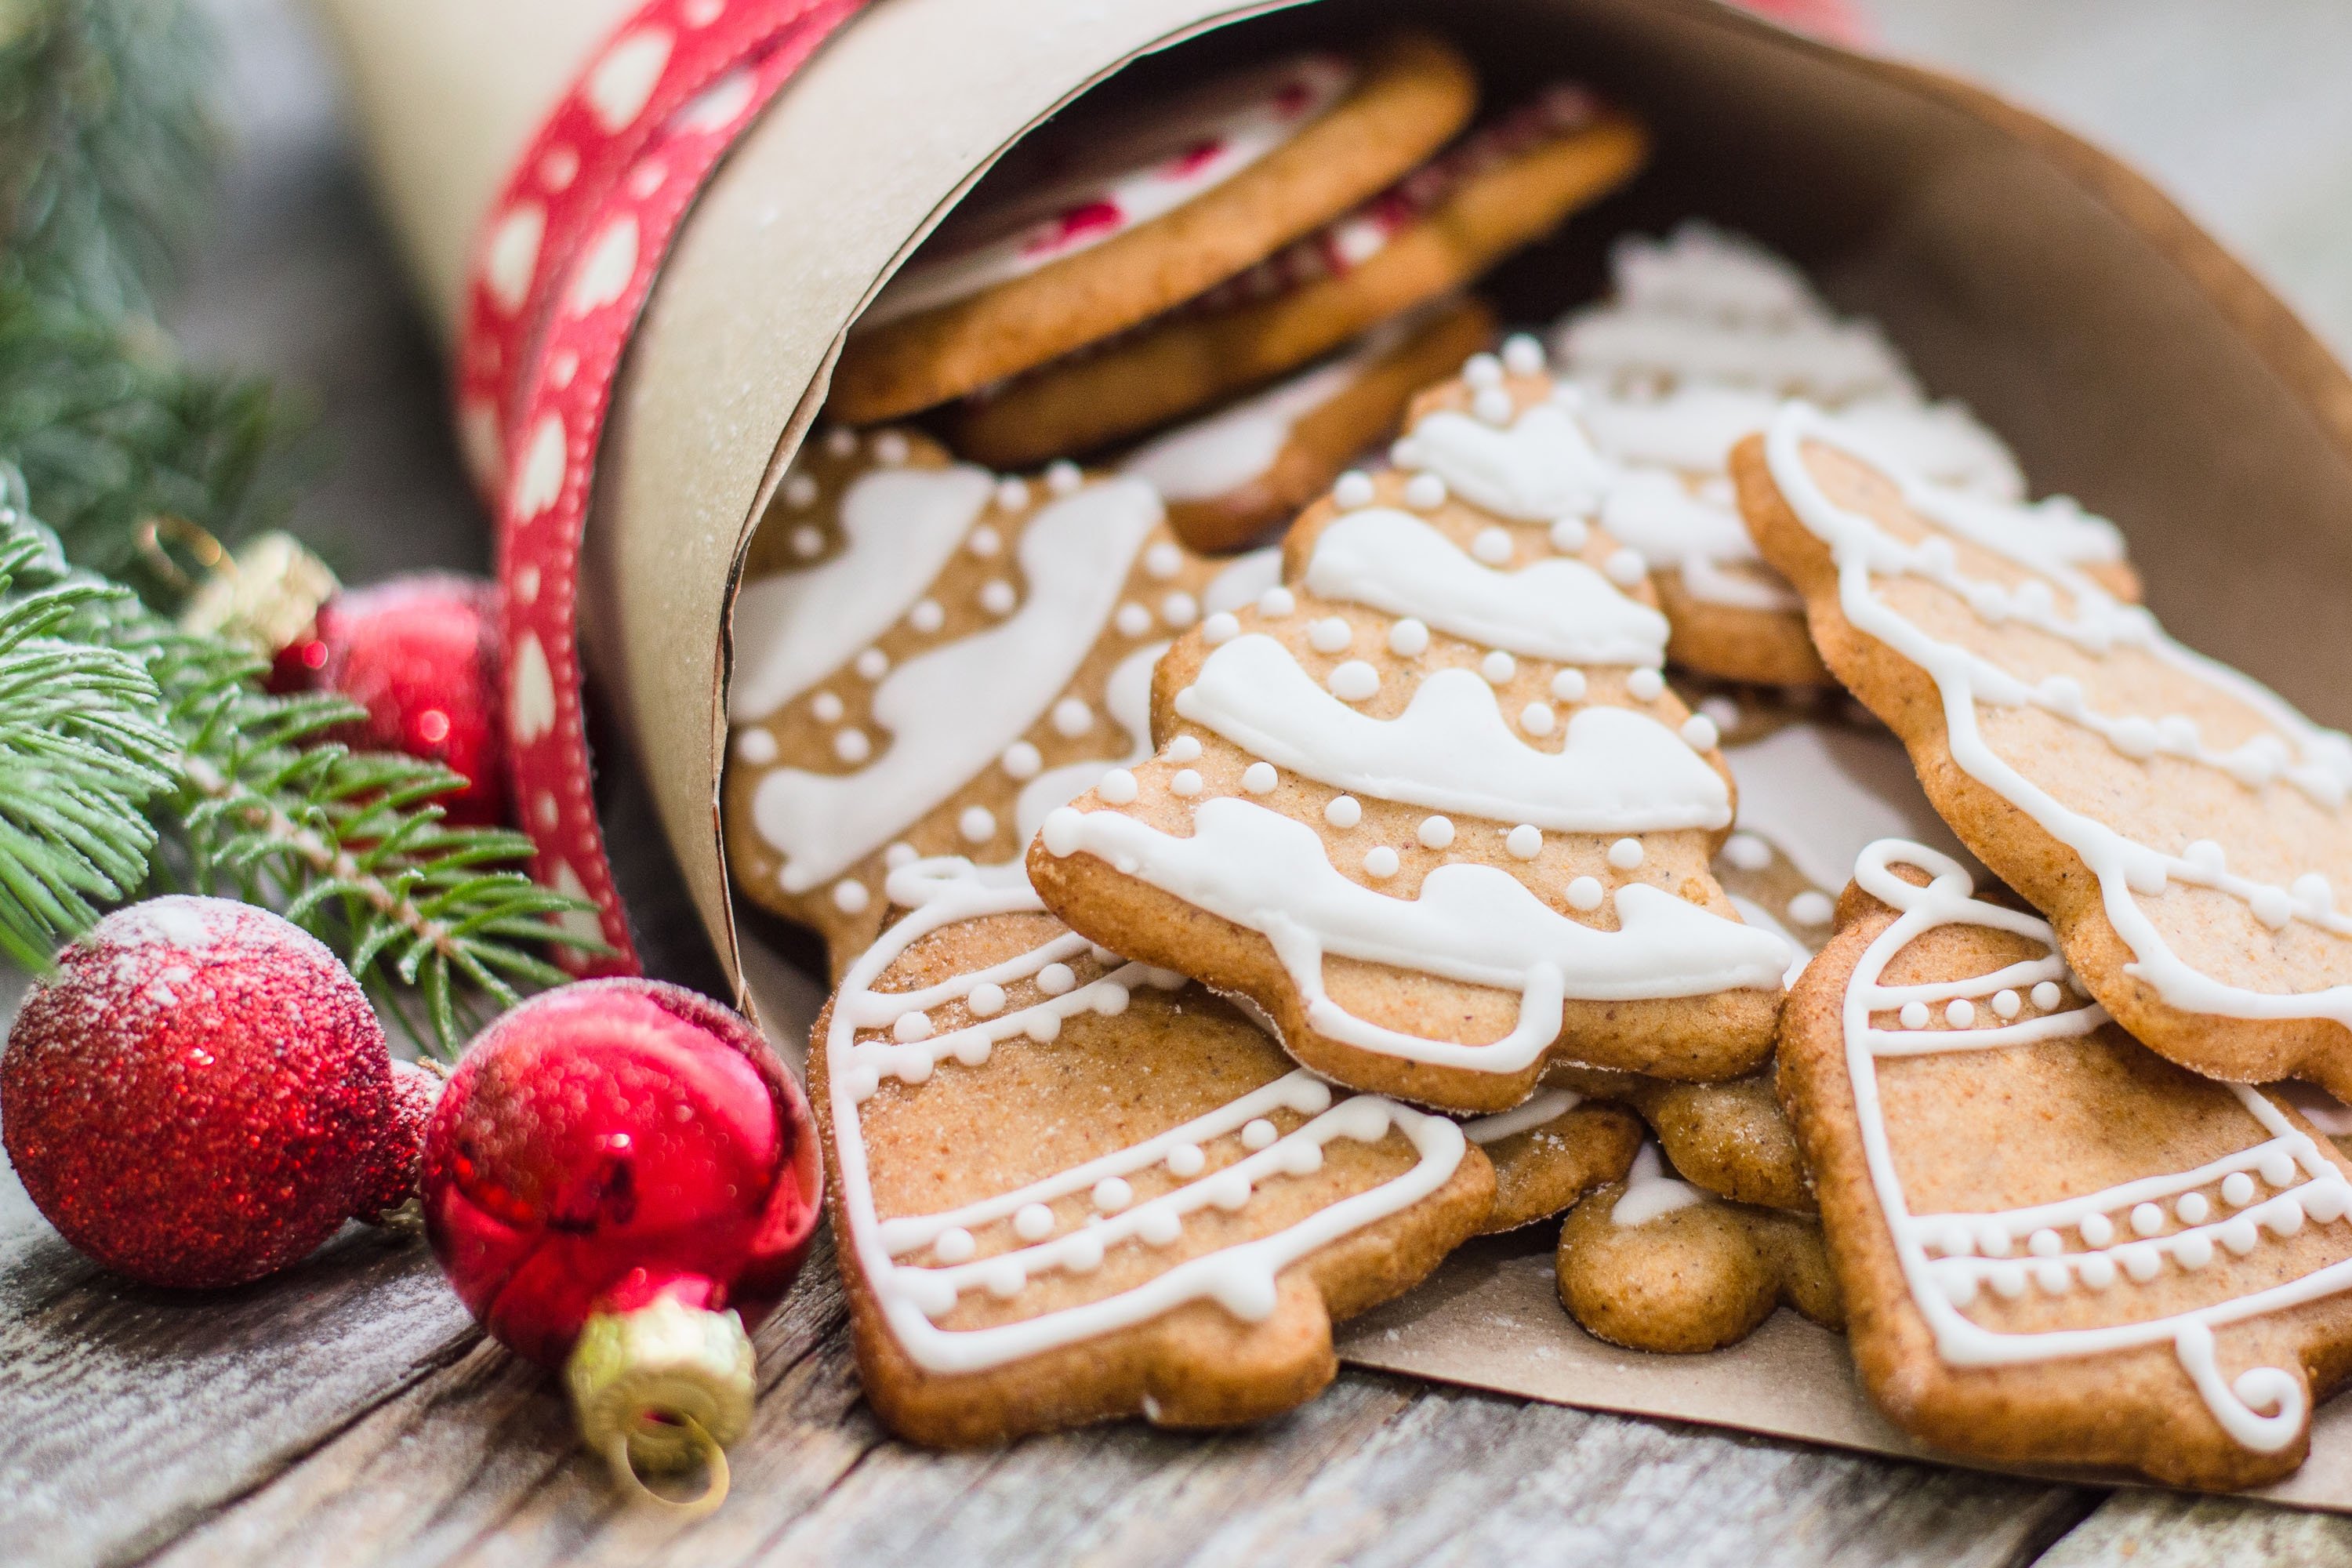 Cookies shaped like Christmas trees. (Shutterstock Photo)